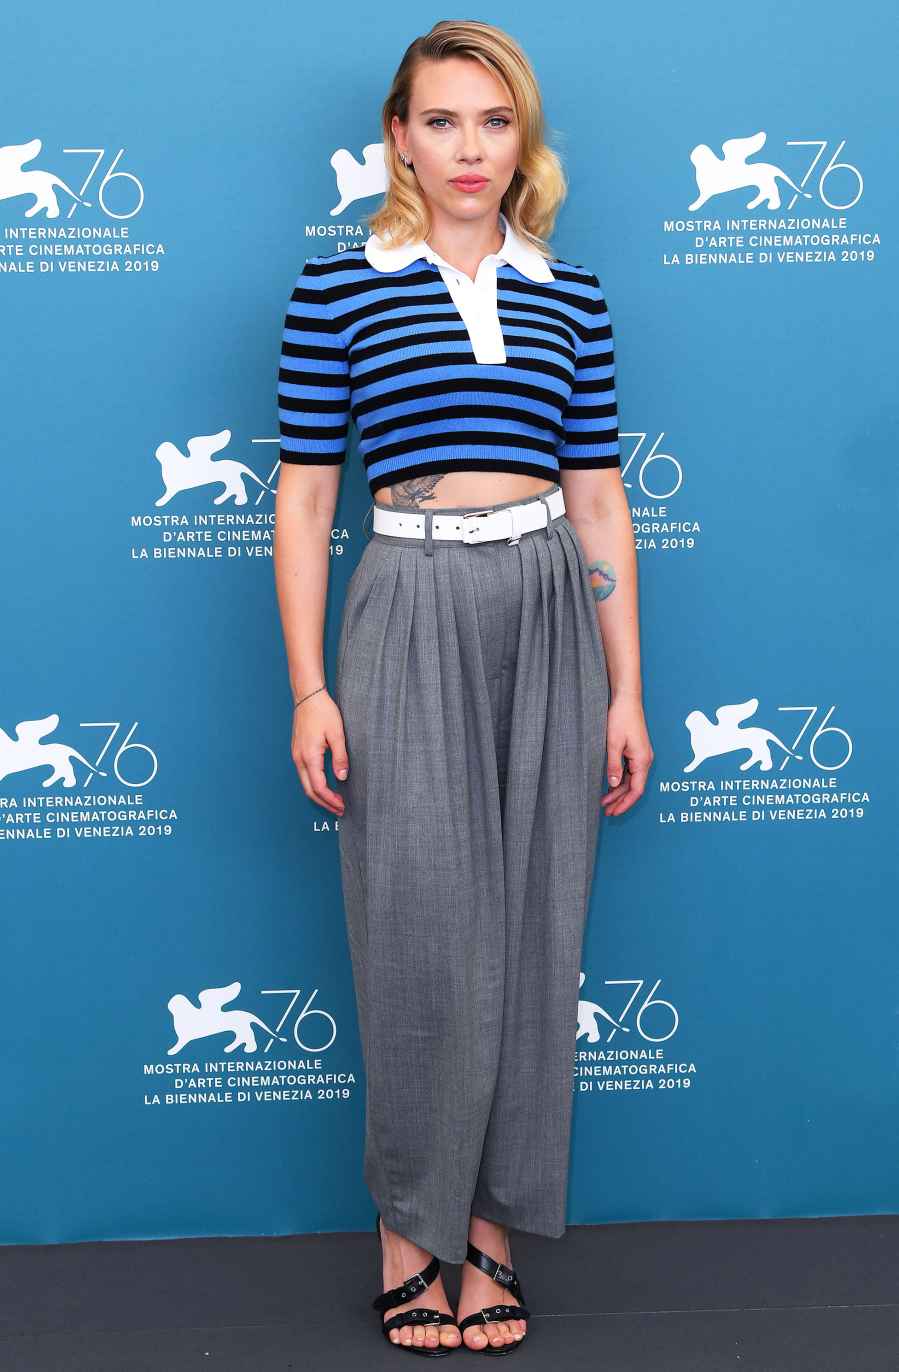 Venice Film Festival 2019 Scarlet Johansson August 29, 2019